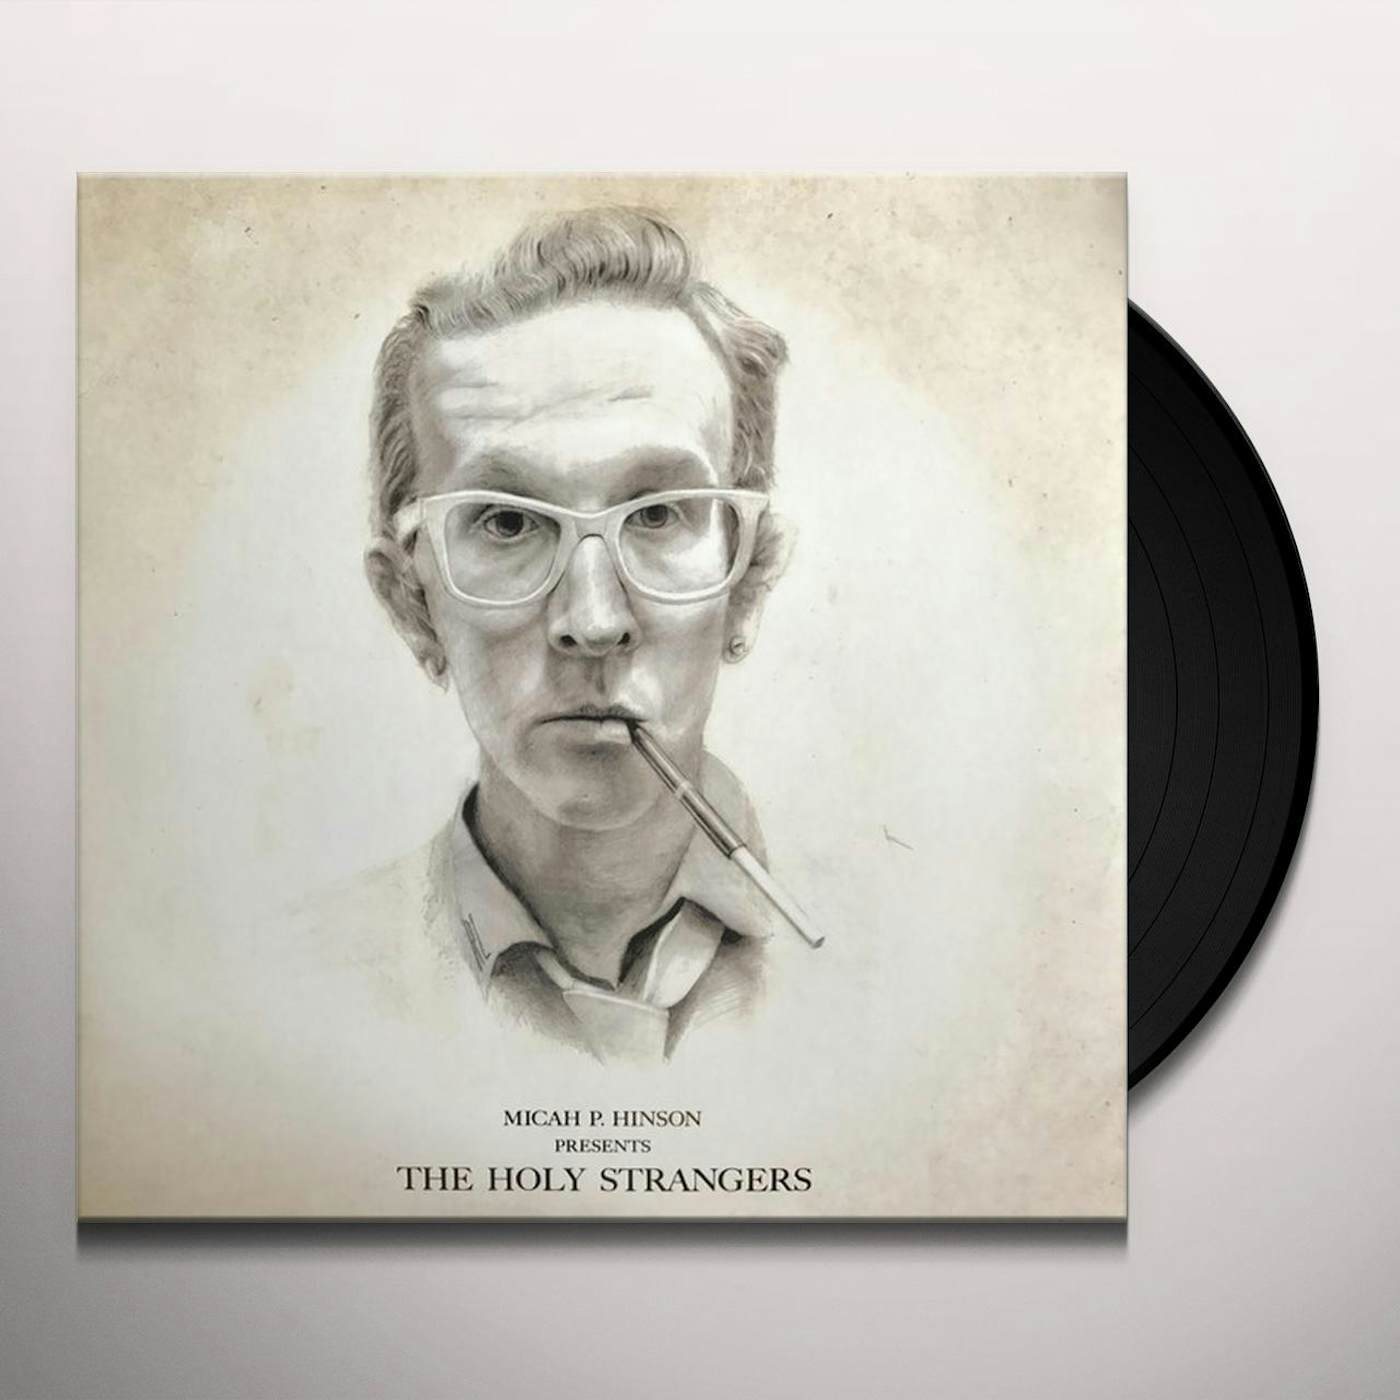 Micah P. Hinson PRESENTS THE HOLY STRANGERS Vinyl Record